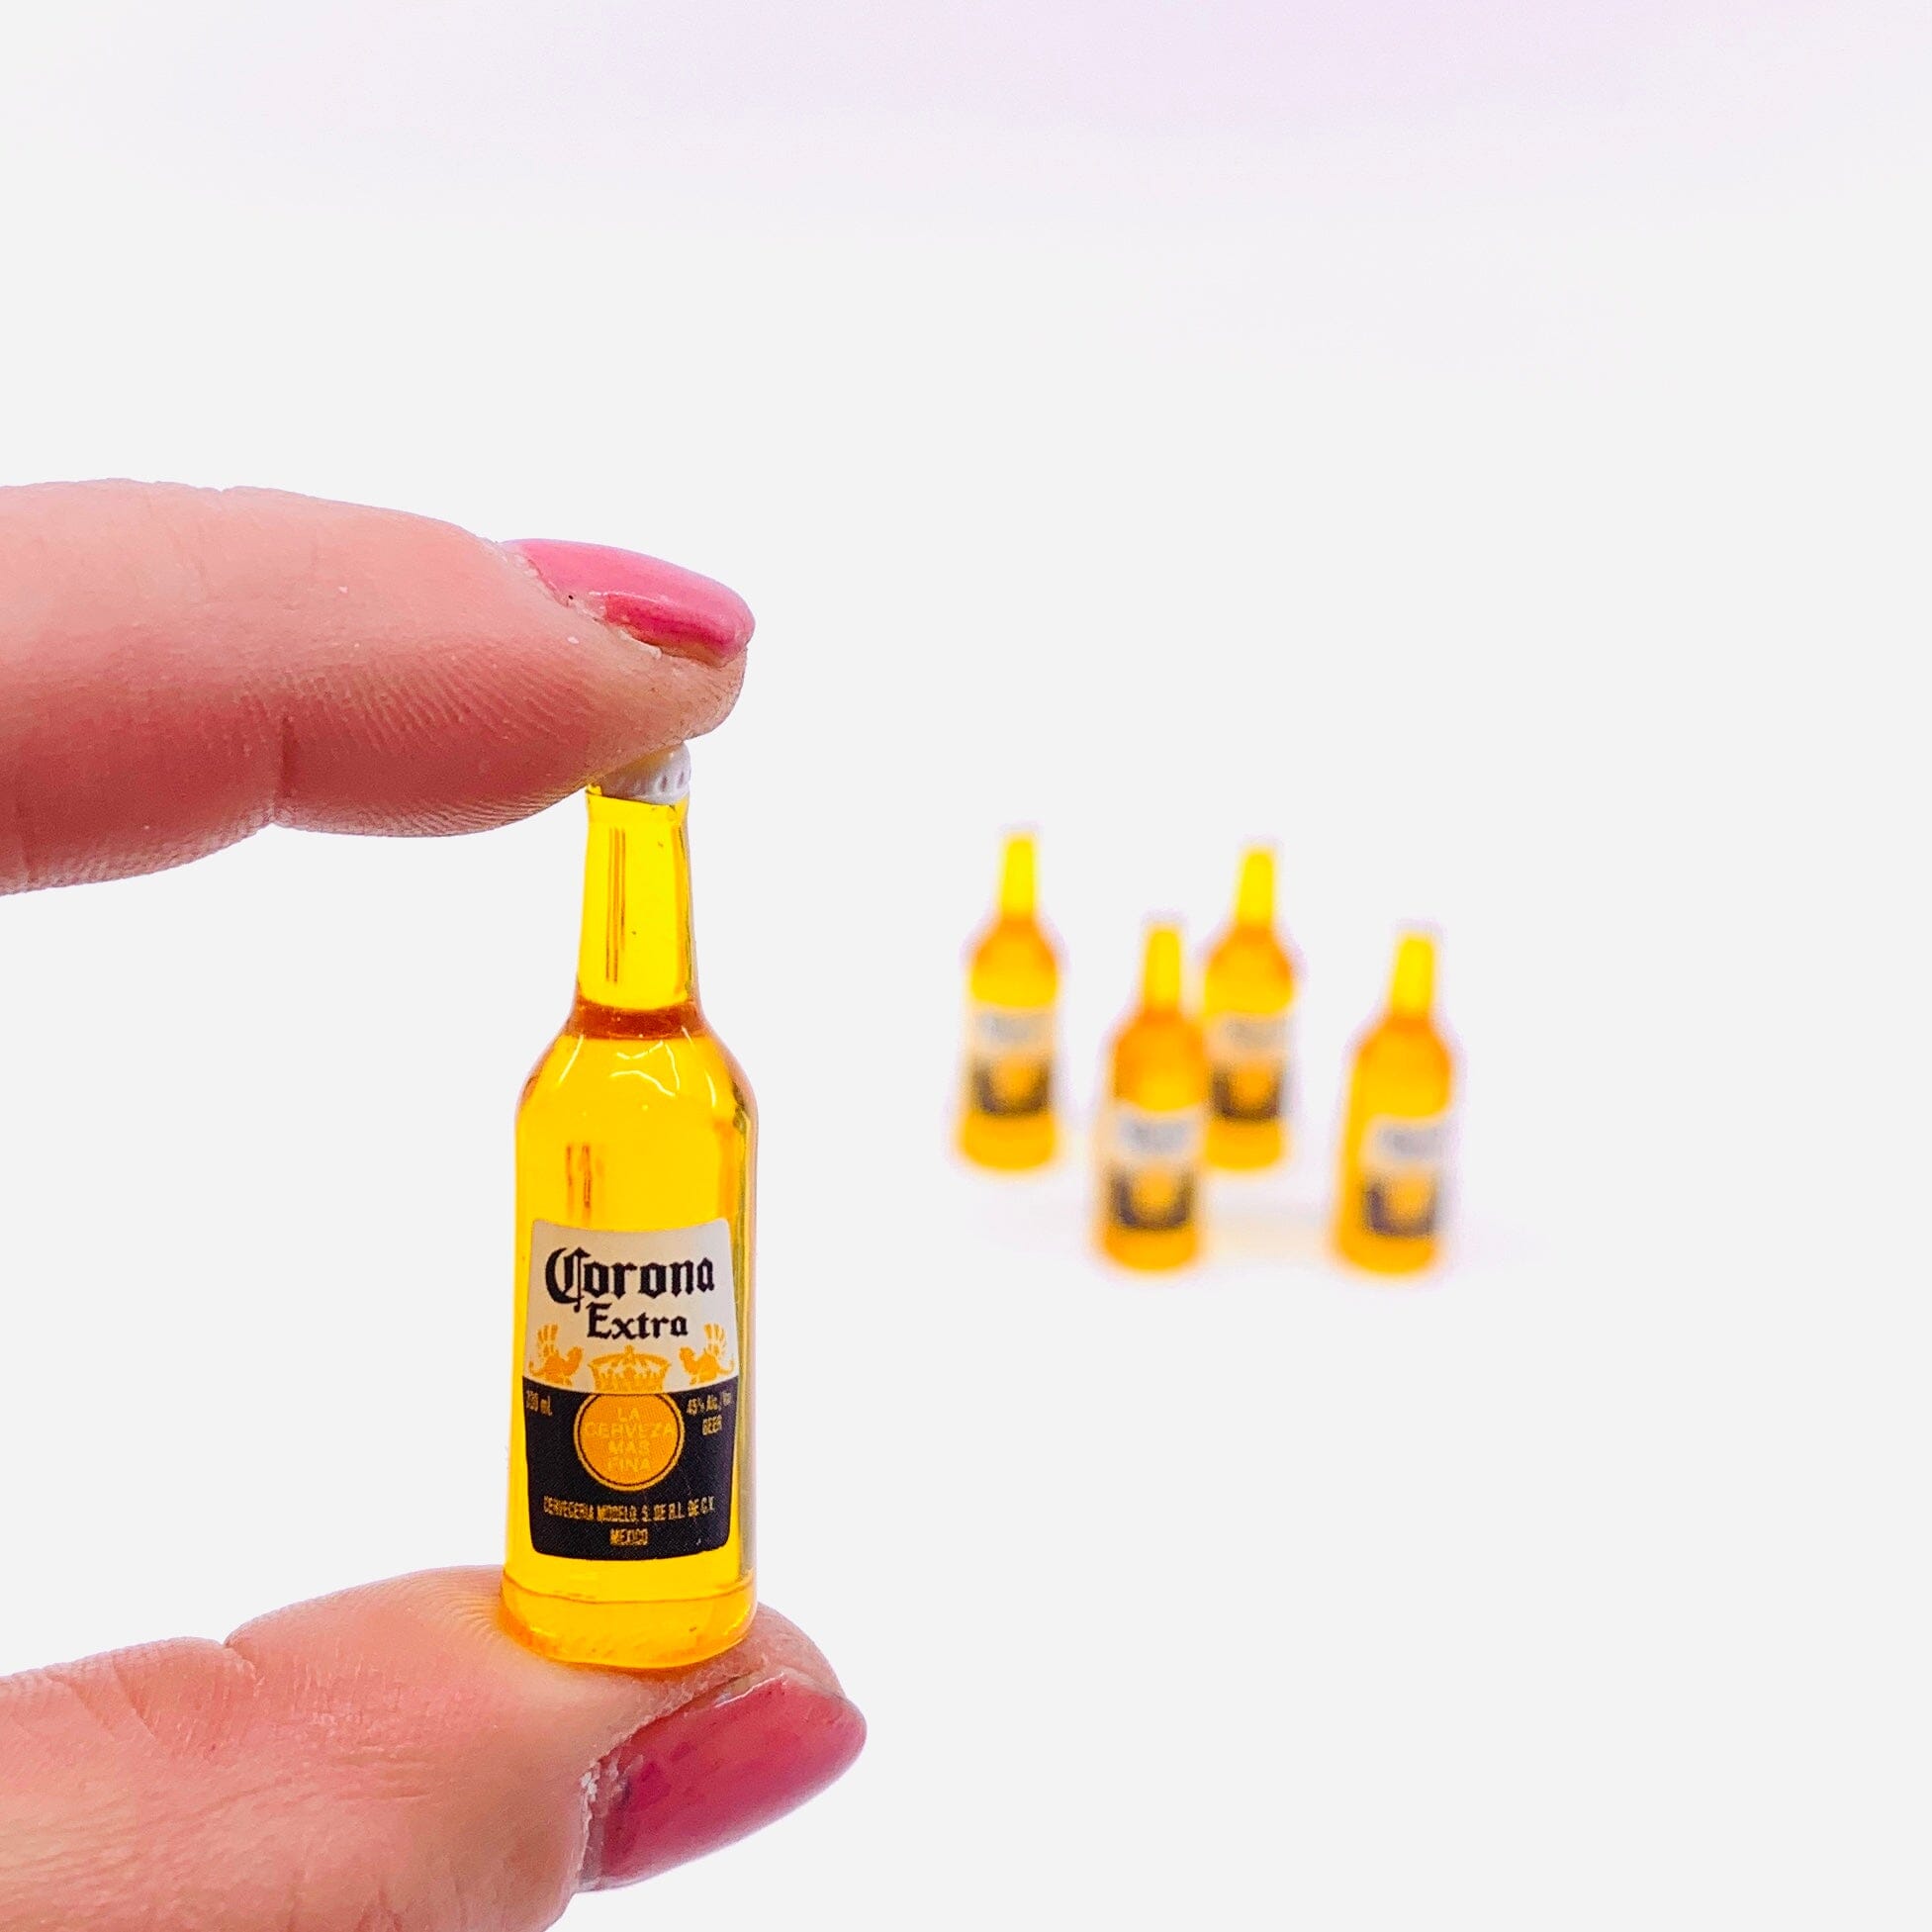 Tiny Corona Bottle Miniature - 